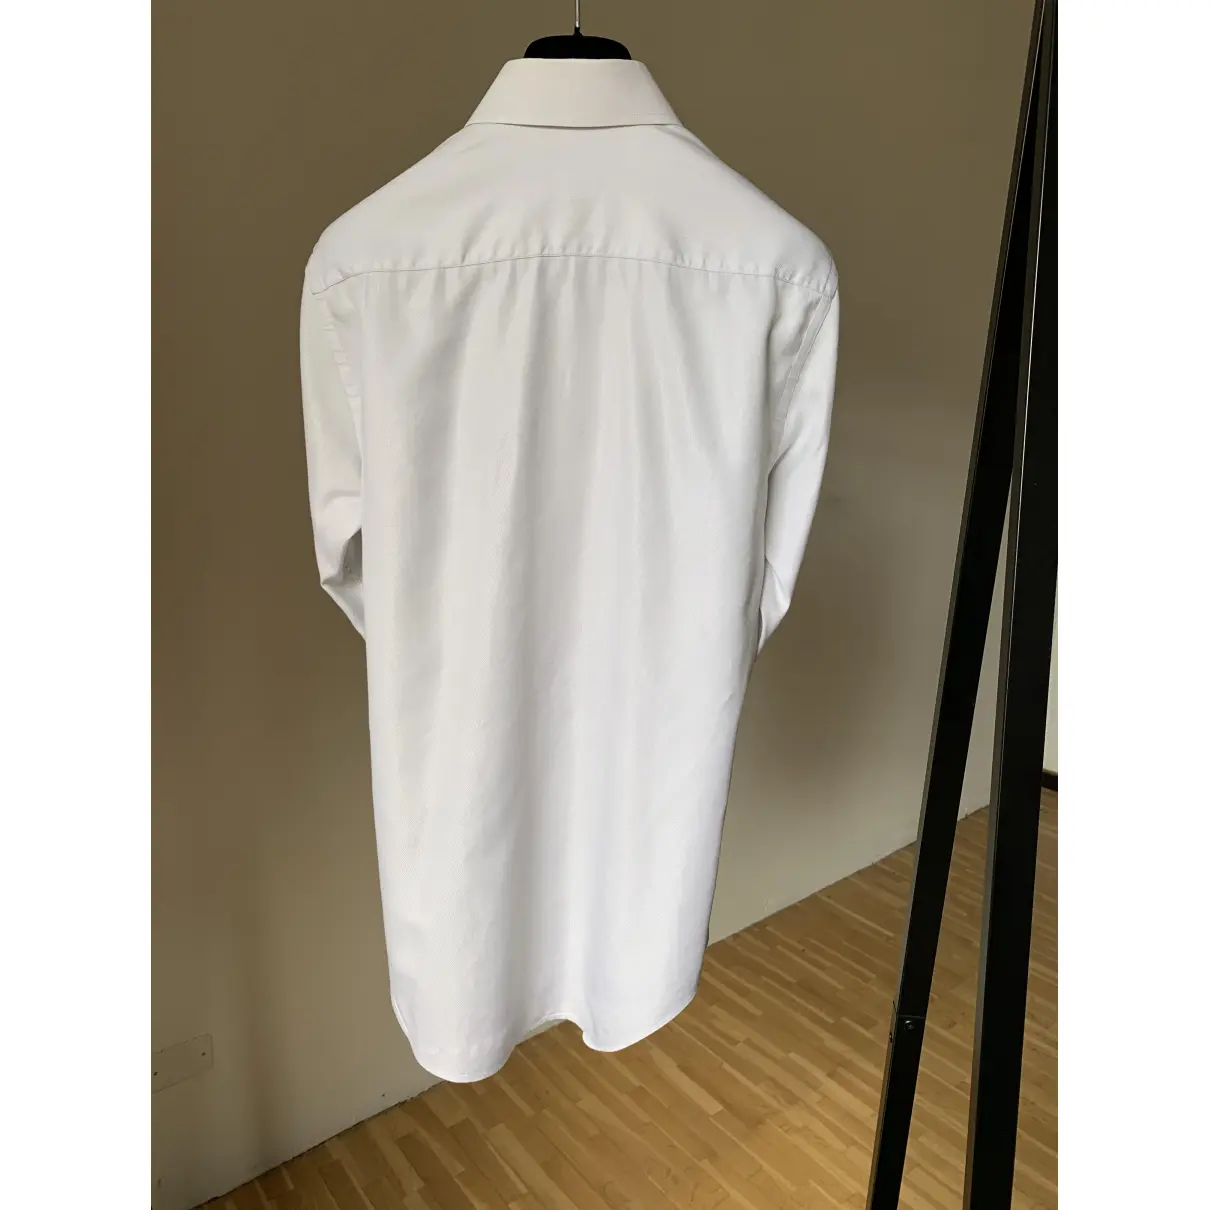 Buy Giorgio Armani Shirt online